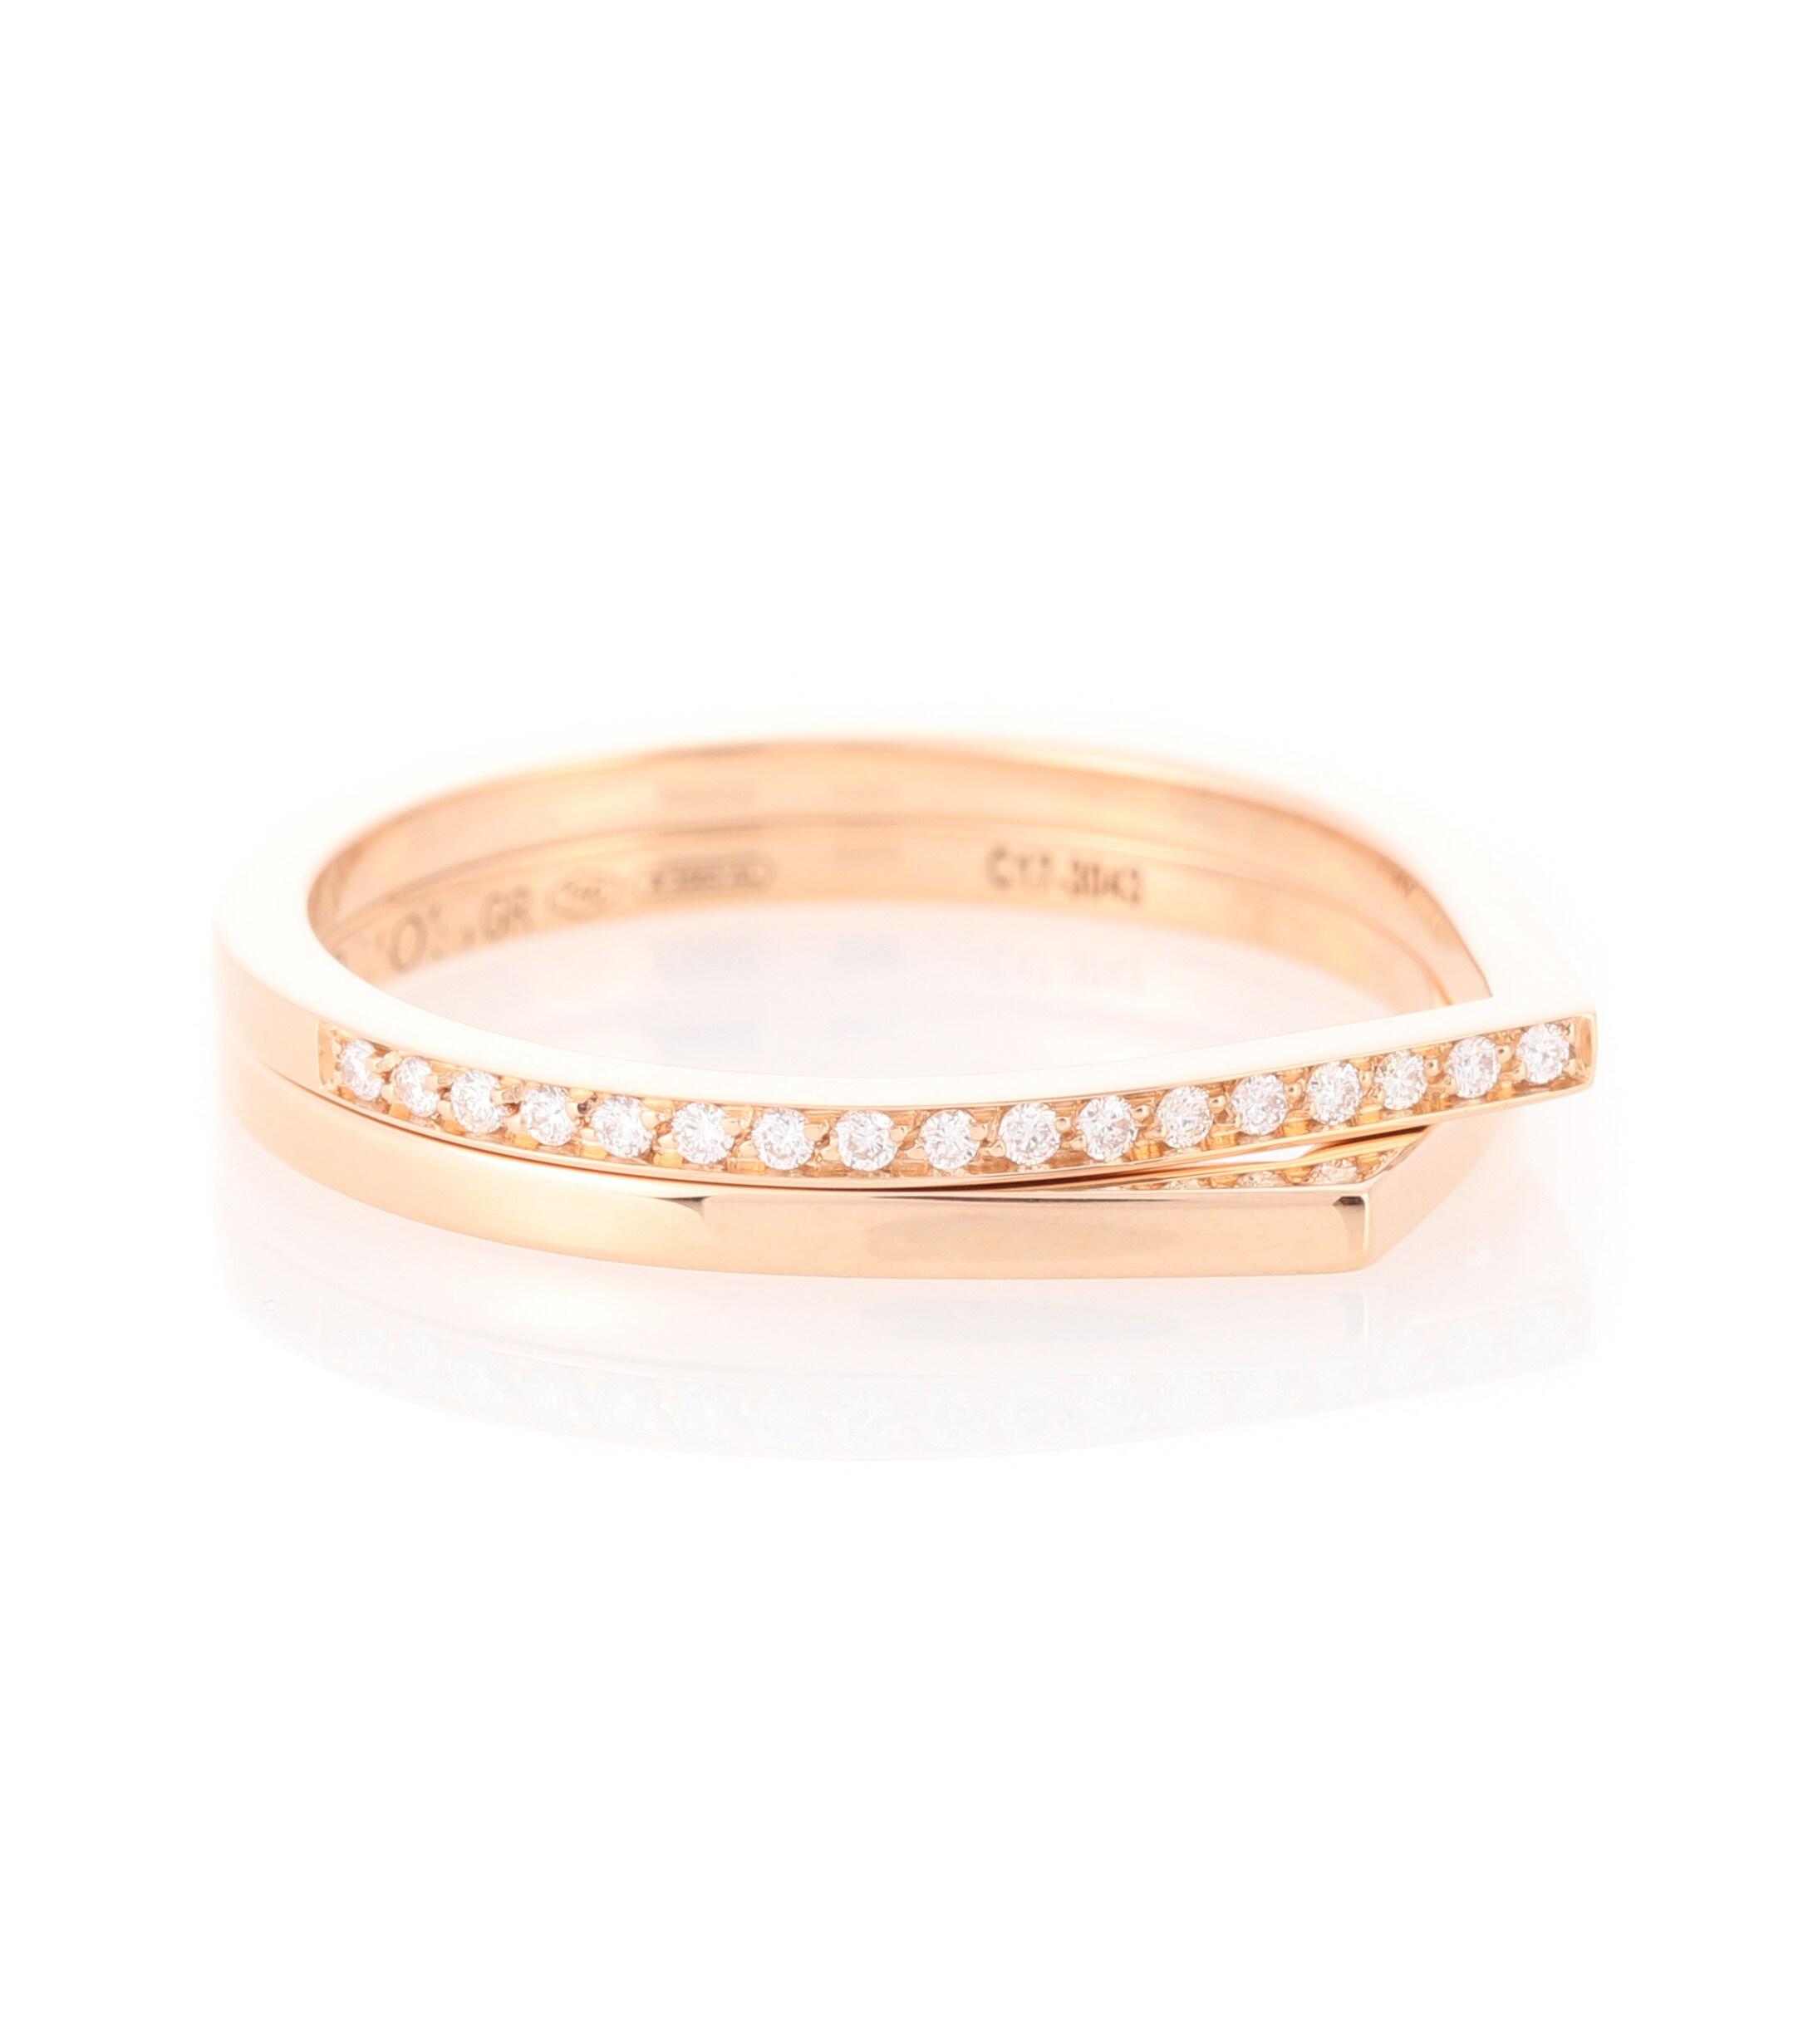 Repossi Antifer 18kt Rose Gold And Diamond Ring in Metallic - Lyst